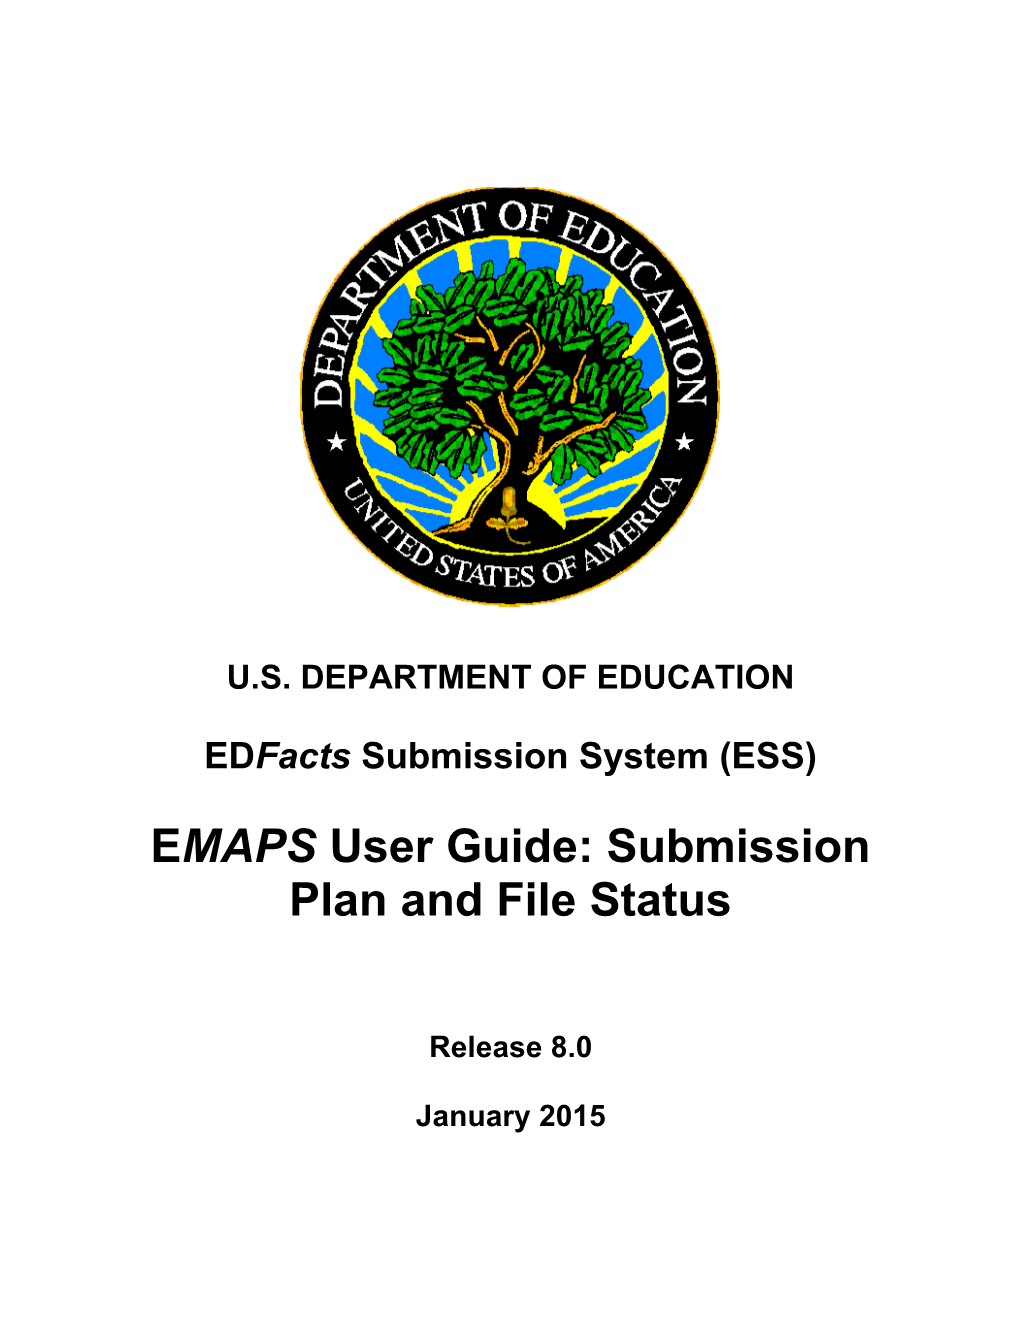 EMAPS SSP User Guide SY 2014-2015 R8